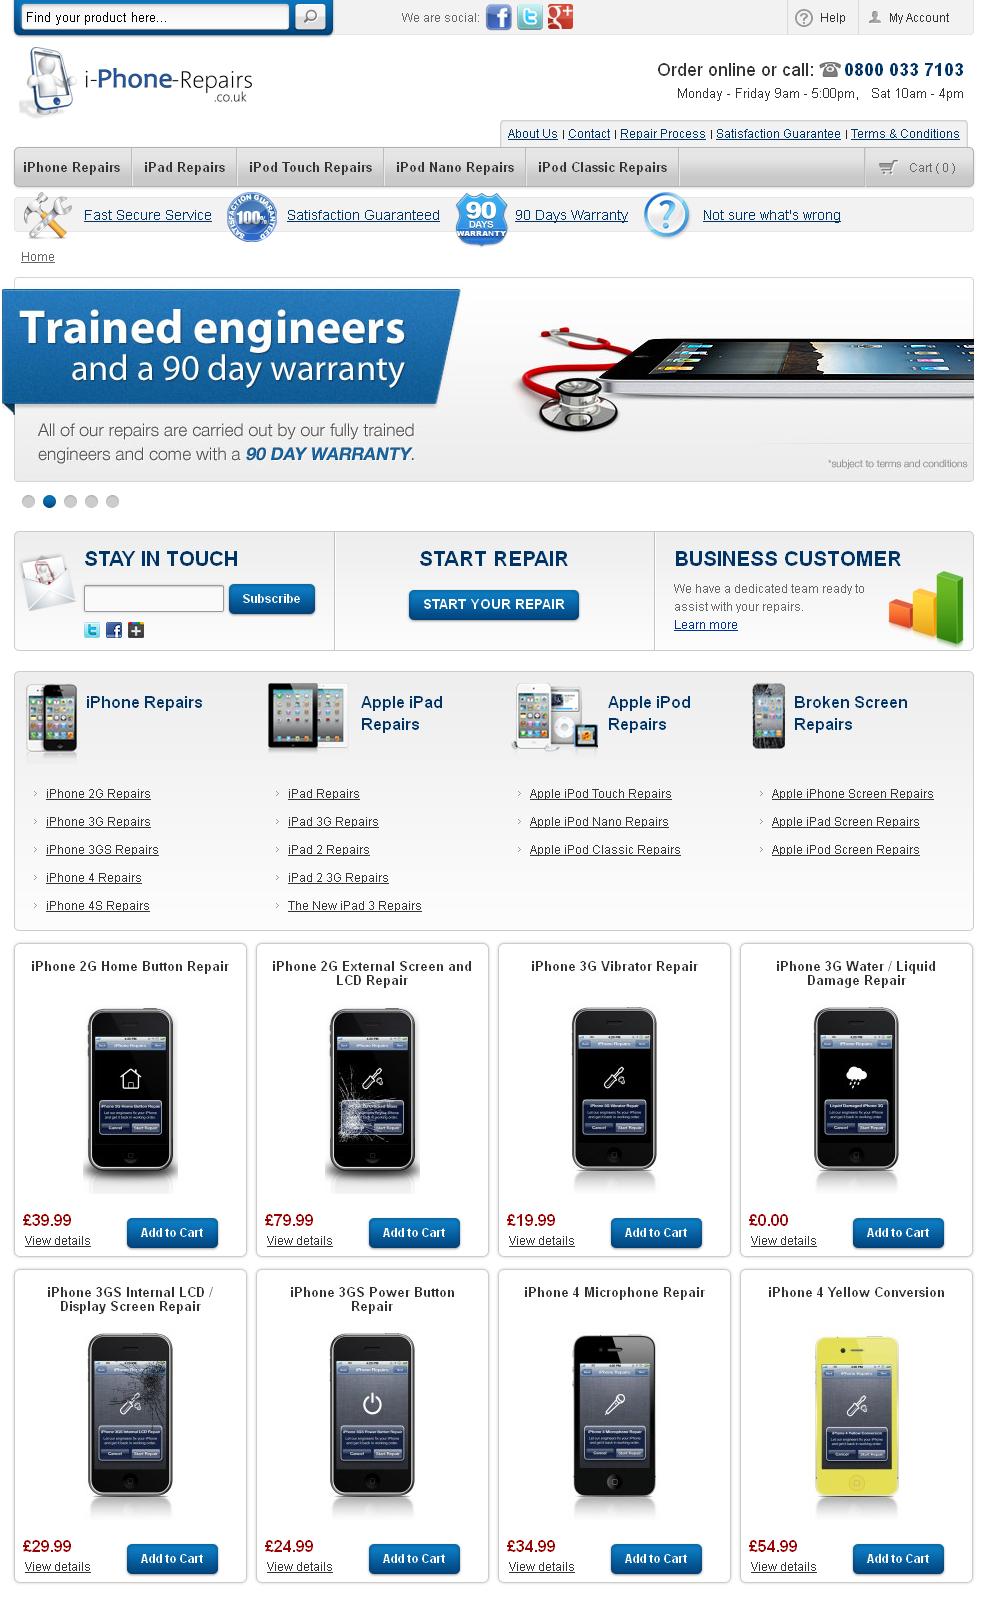  Magento Website for iPhone Repairs Service 'iPhone Repairs'